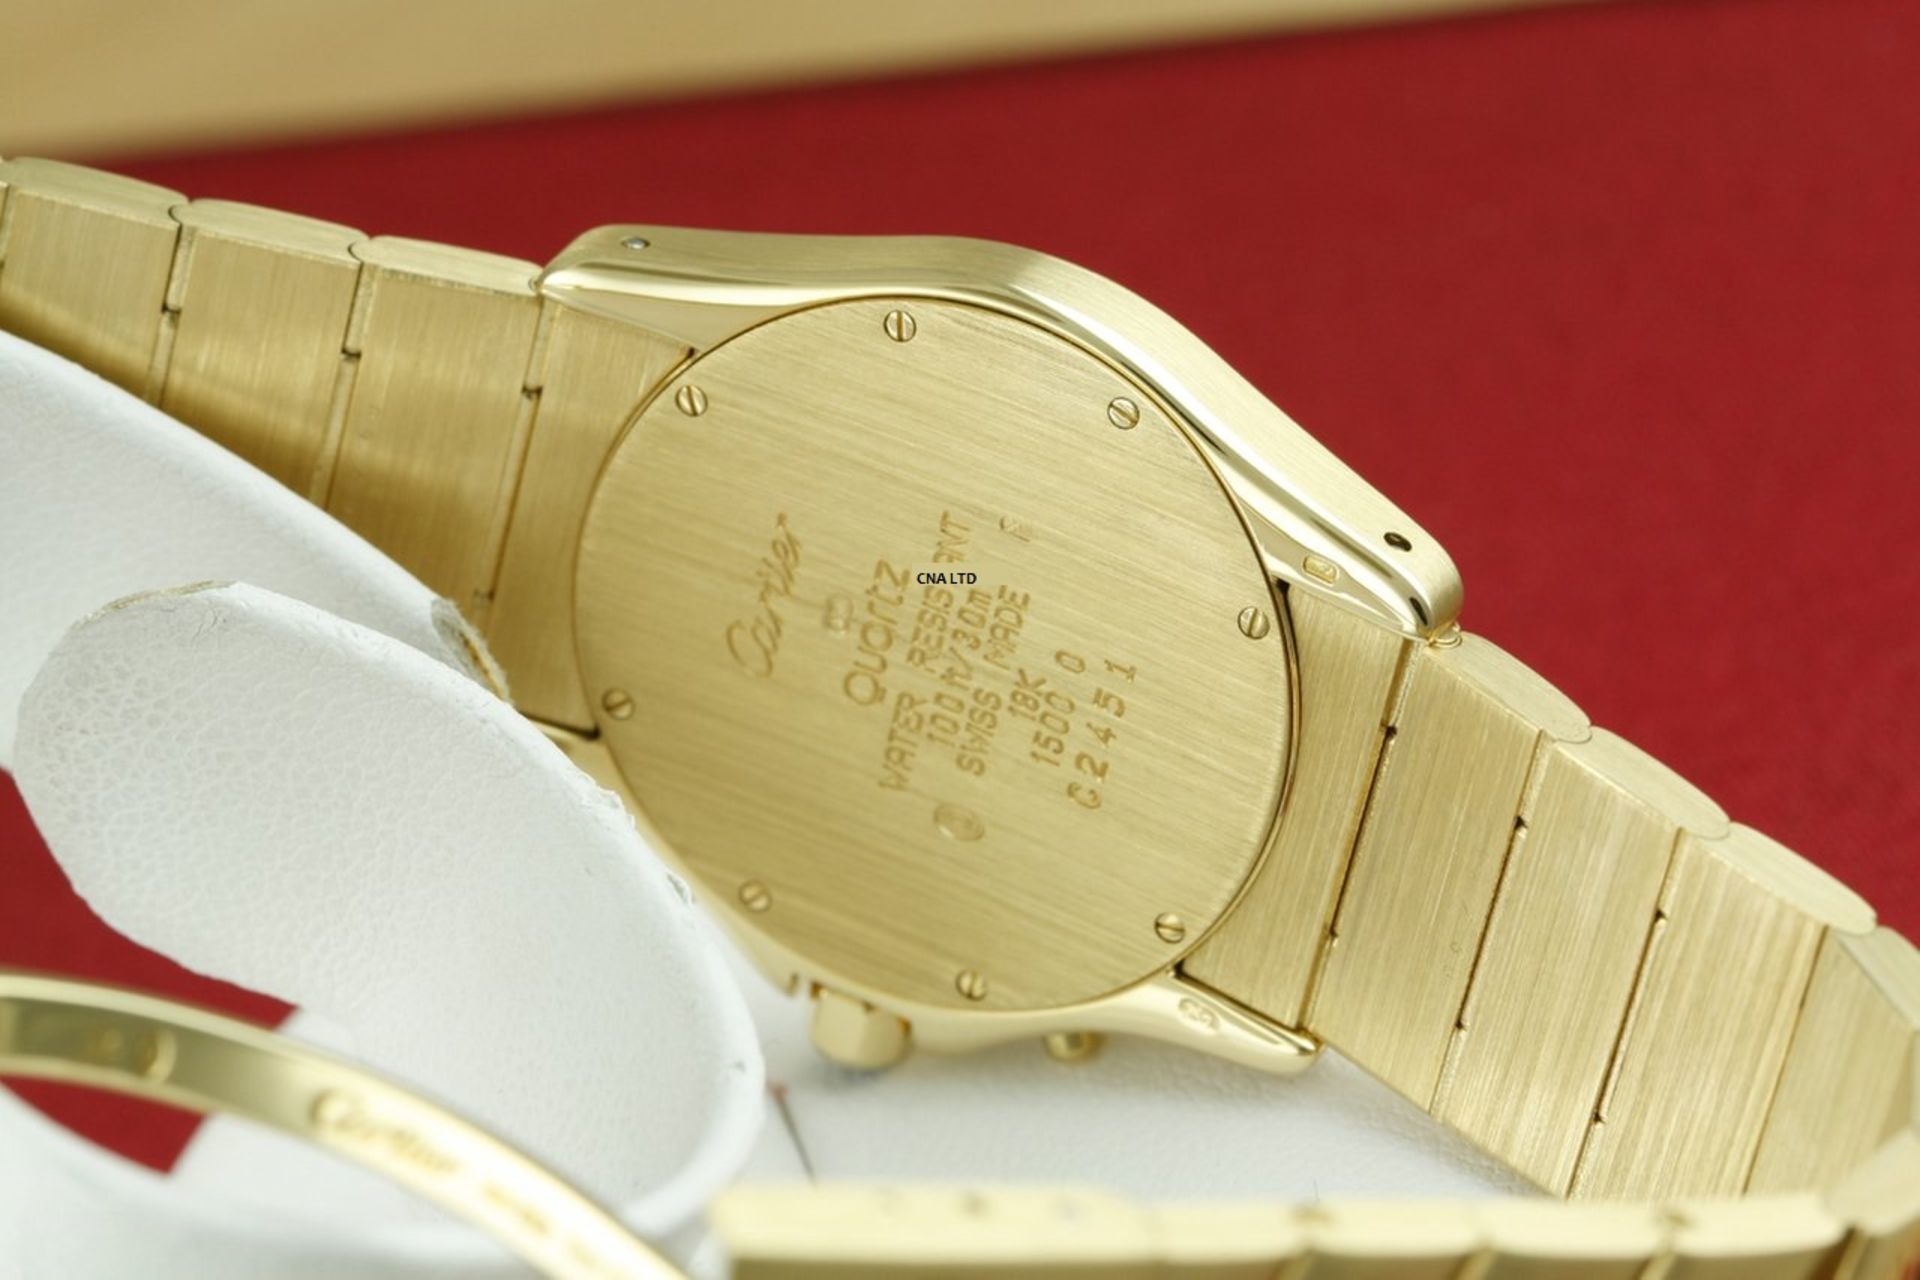 Cartier Santos Ronde Cougar Chronograph 18k Watch - Image 7 of 9